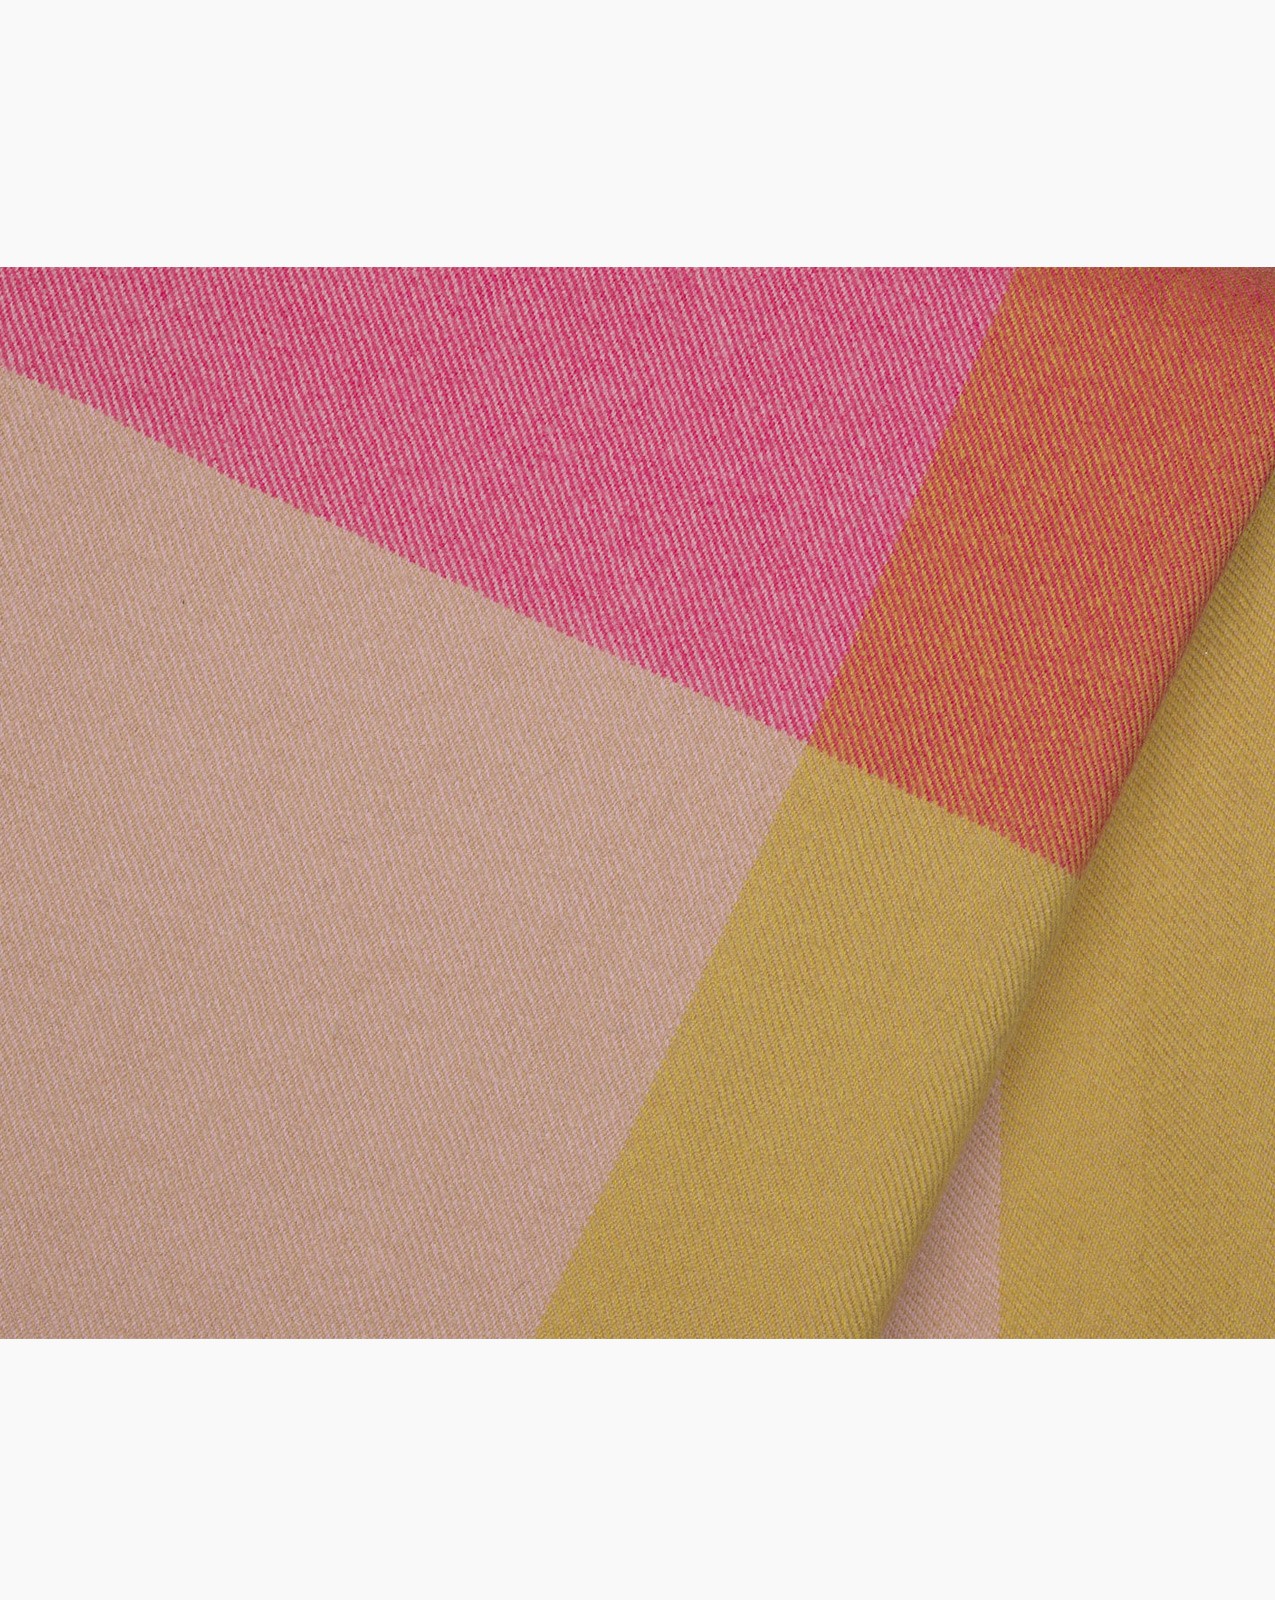 Vitra Colour block blankets pink beige